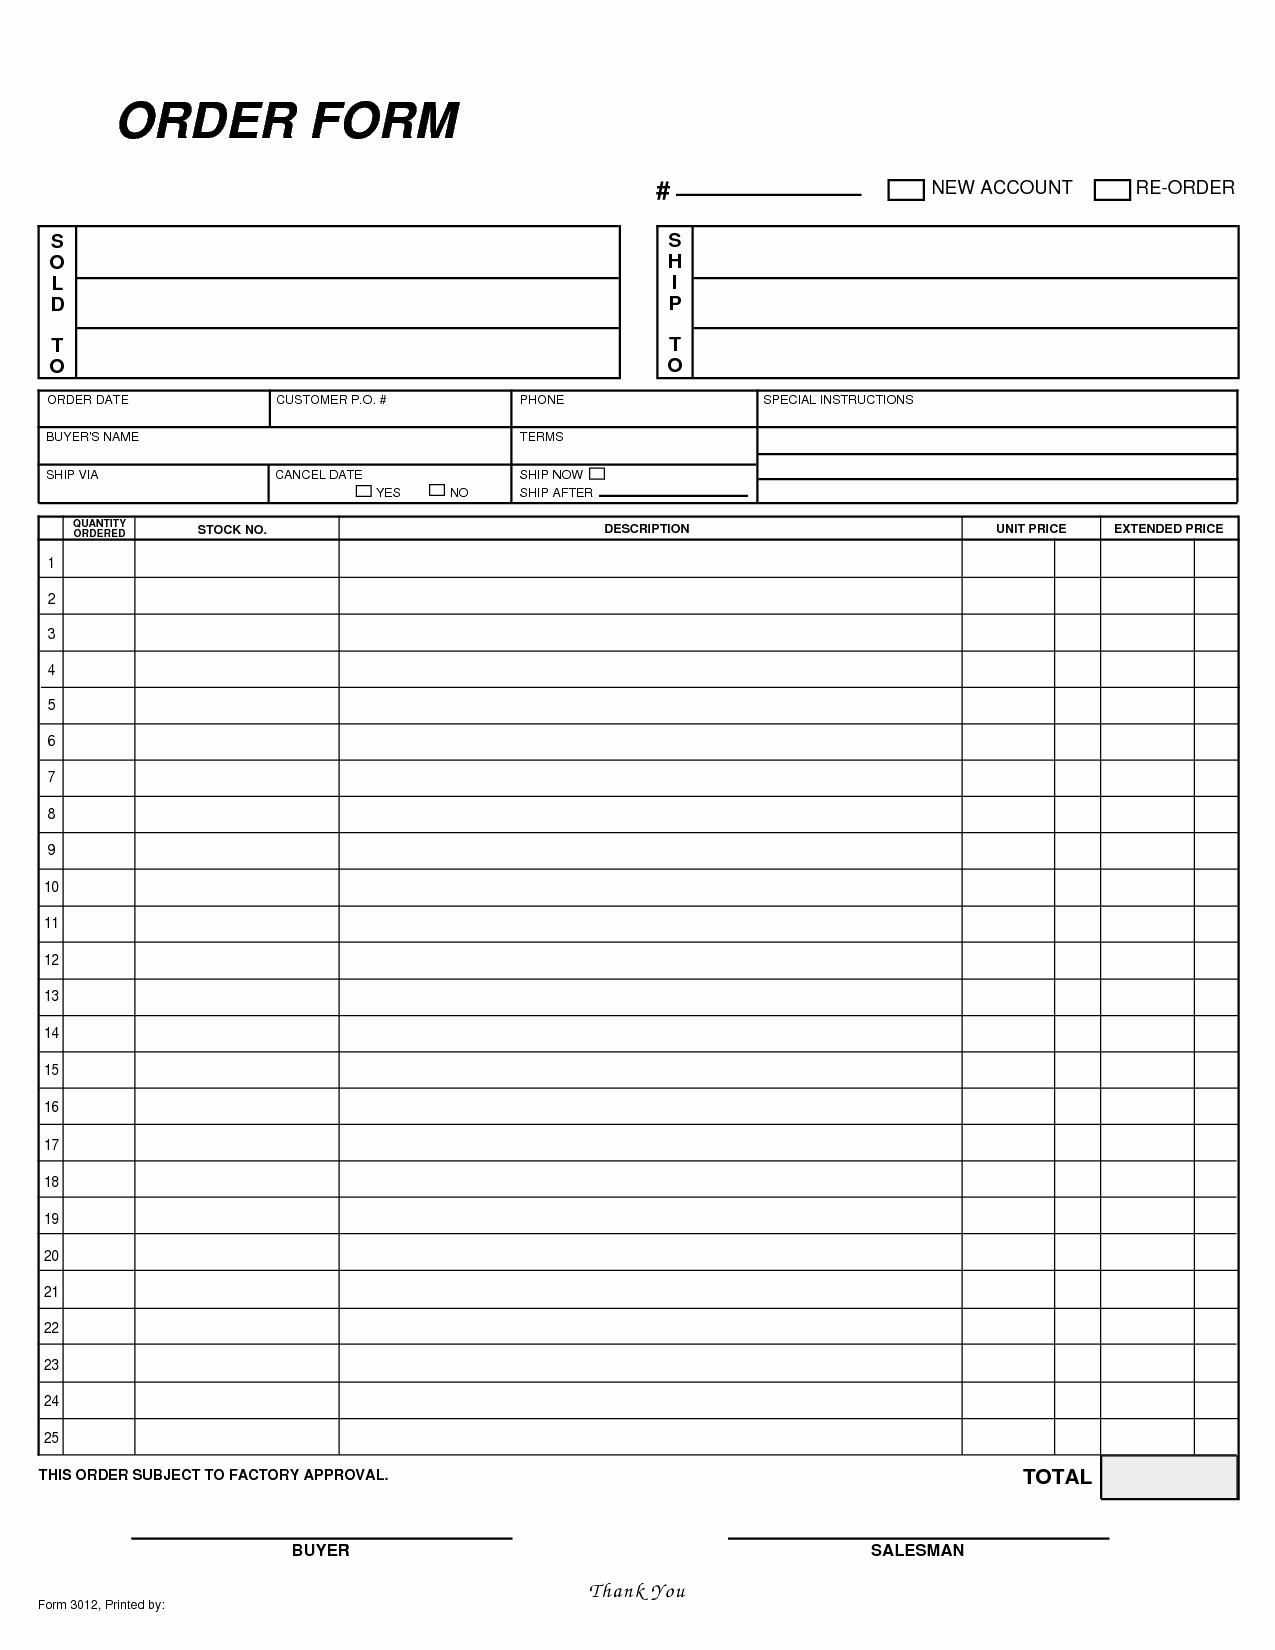 Bank Change order form Template Inspirational Free Blank order form Template